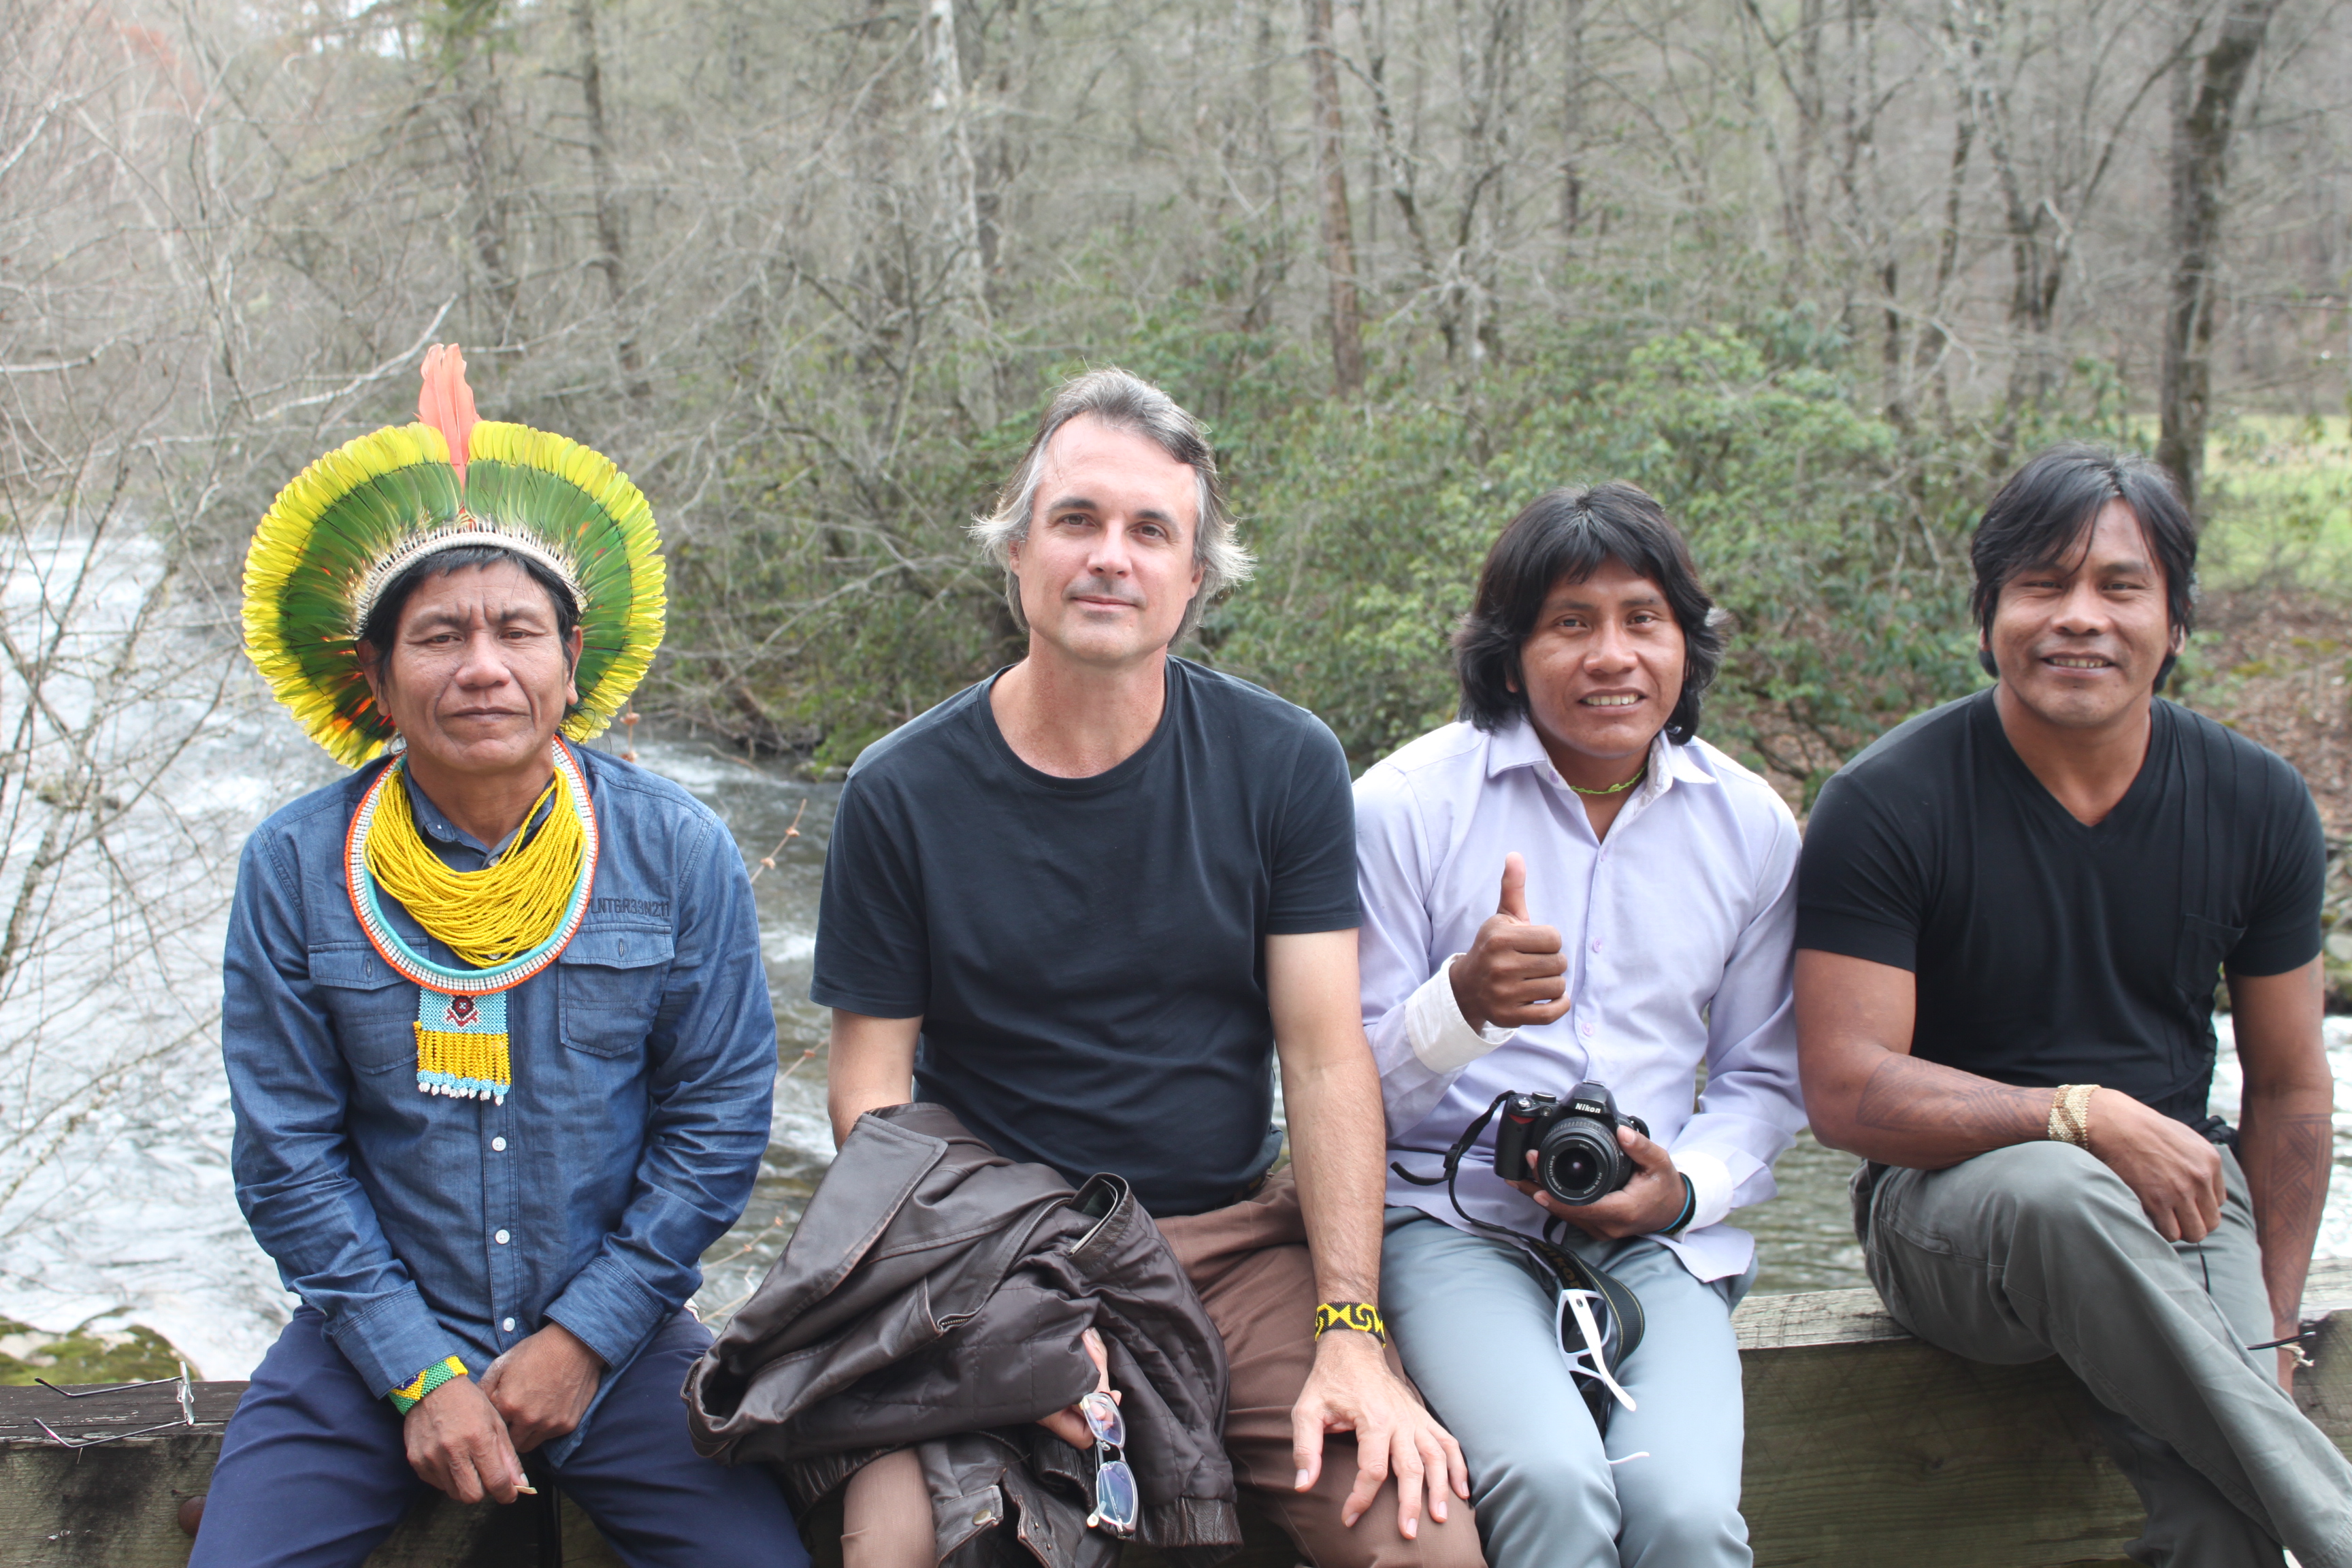 Visiting Cherokee NC, Kiabieti Metuktire, Krakrax Kayapo, and Bepunu Kayapo and Glenn Shephard